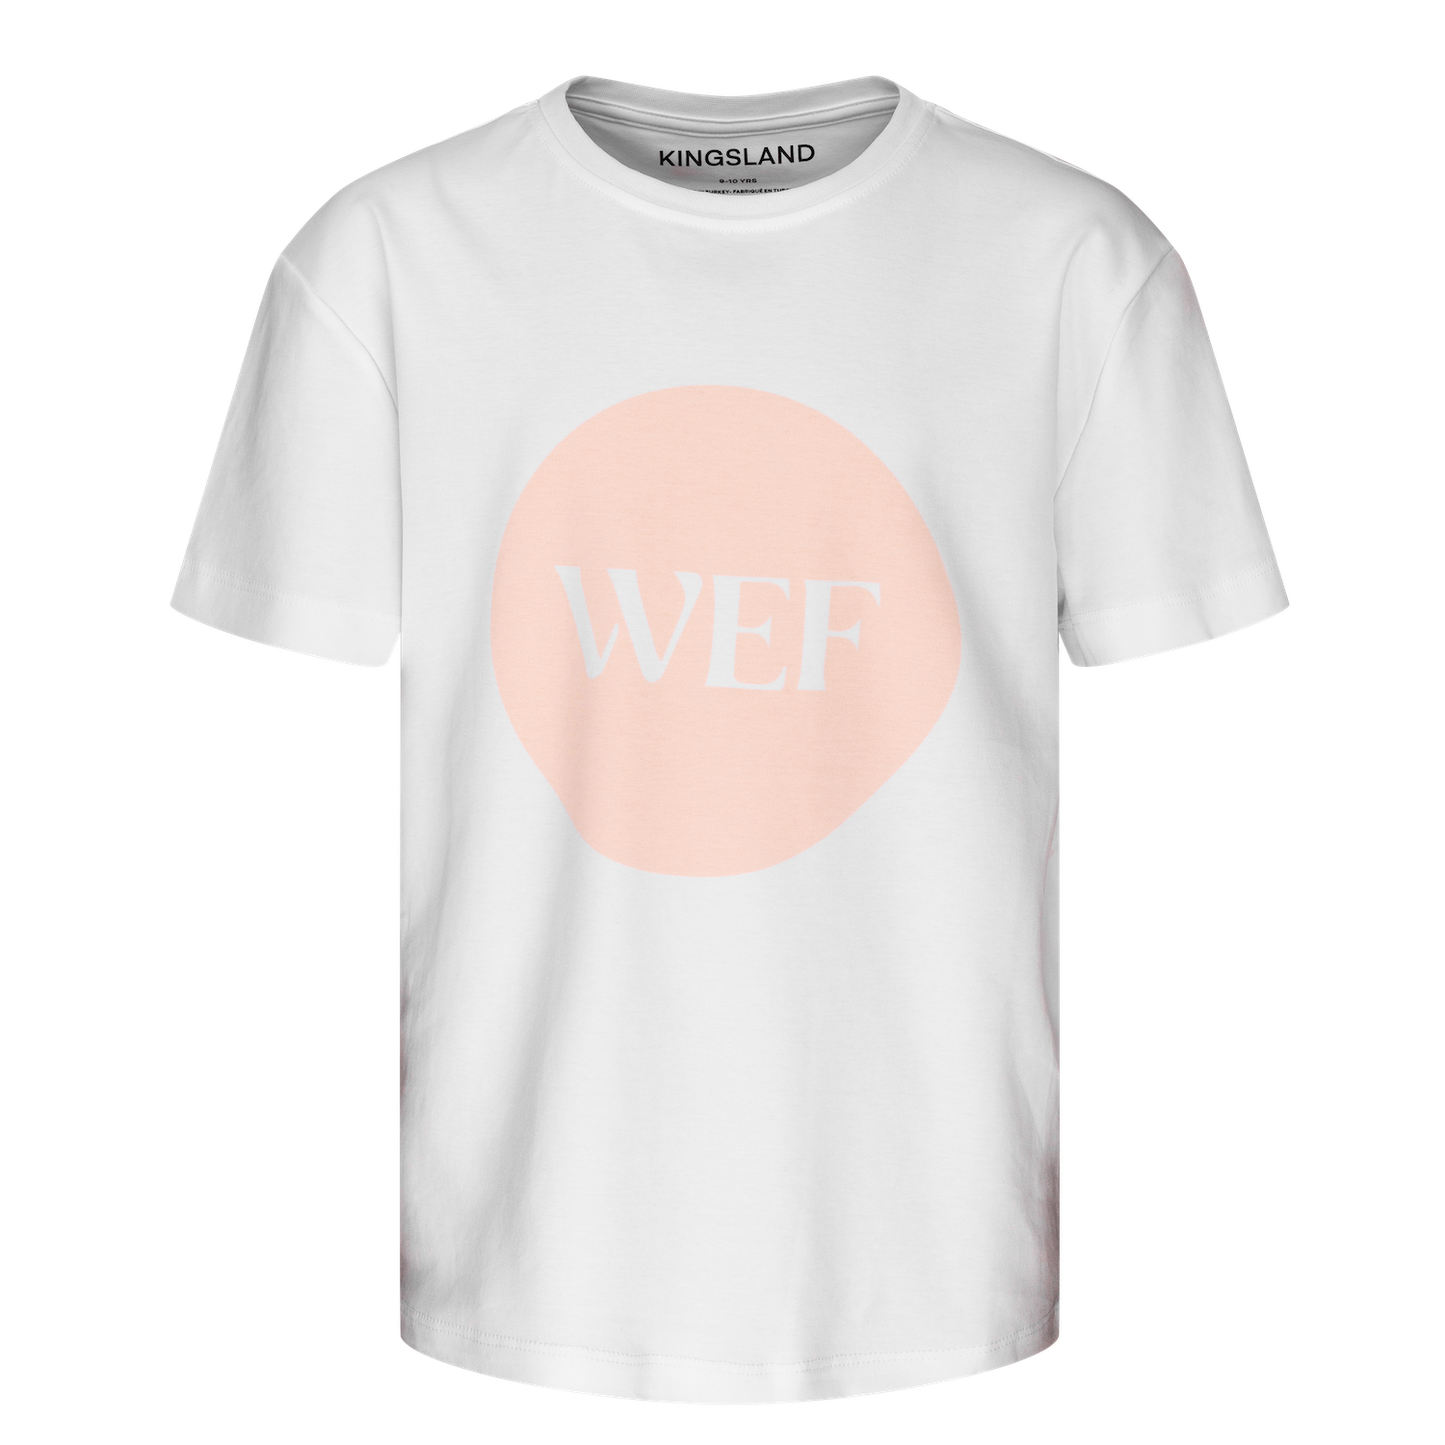 WEF Junior T-shirt Circle Print